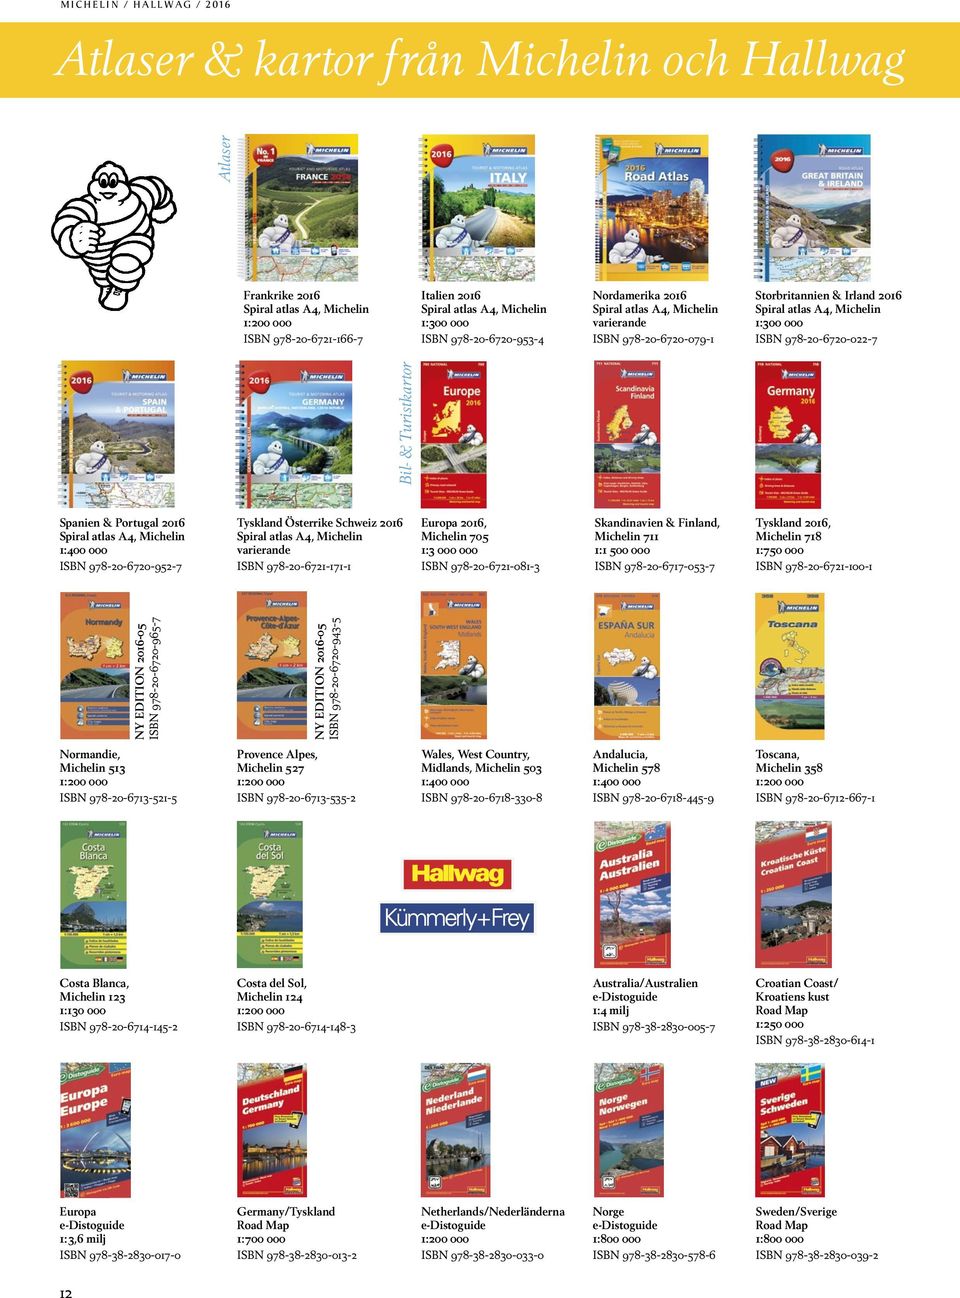 Turistkartor Atlaser Spanien & Portugal 2016 Spiral atlas A4, Michelin 1:400 000 ISBN 978-20-6720-952-7 Tyskland Österrike Schweiz 2016 Spiral atlas A4, Michelin varierande ISBN 978-20-6721-171-1